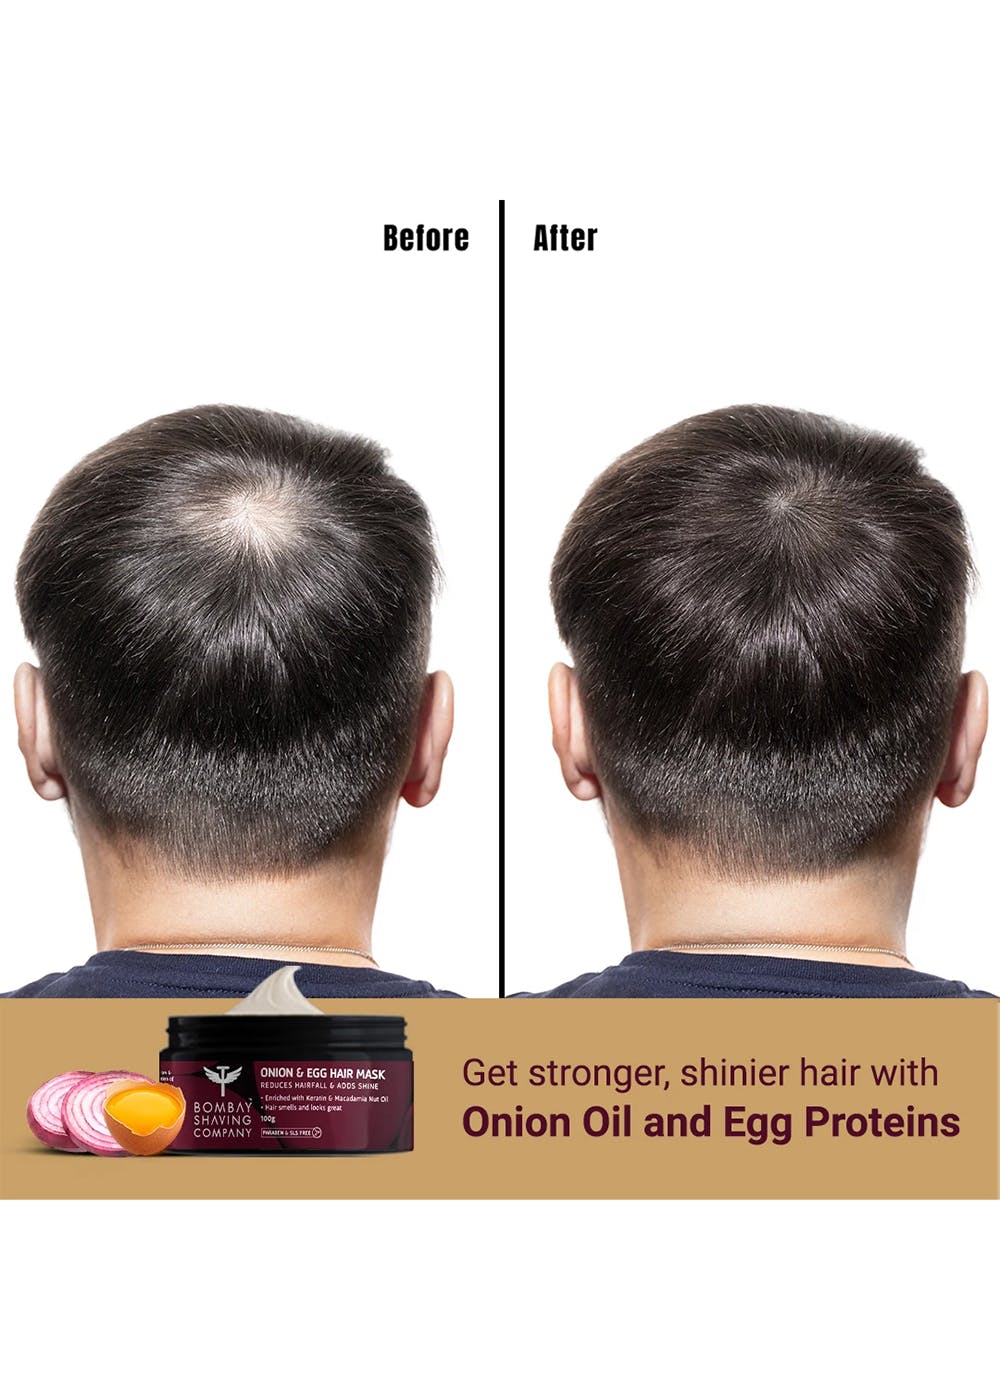 Best onion hair oil for hair growth | Business Insider India